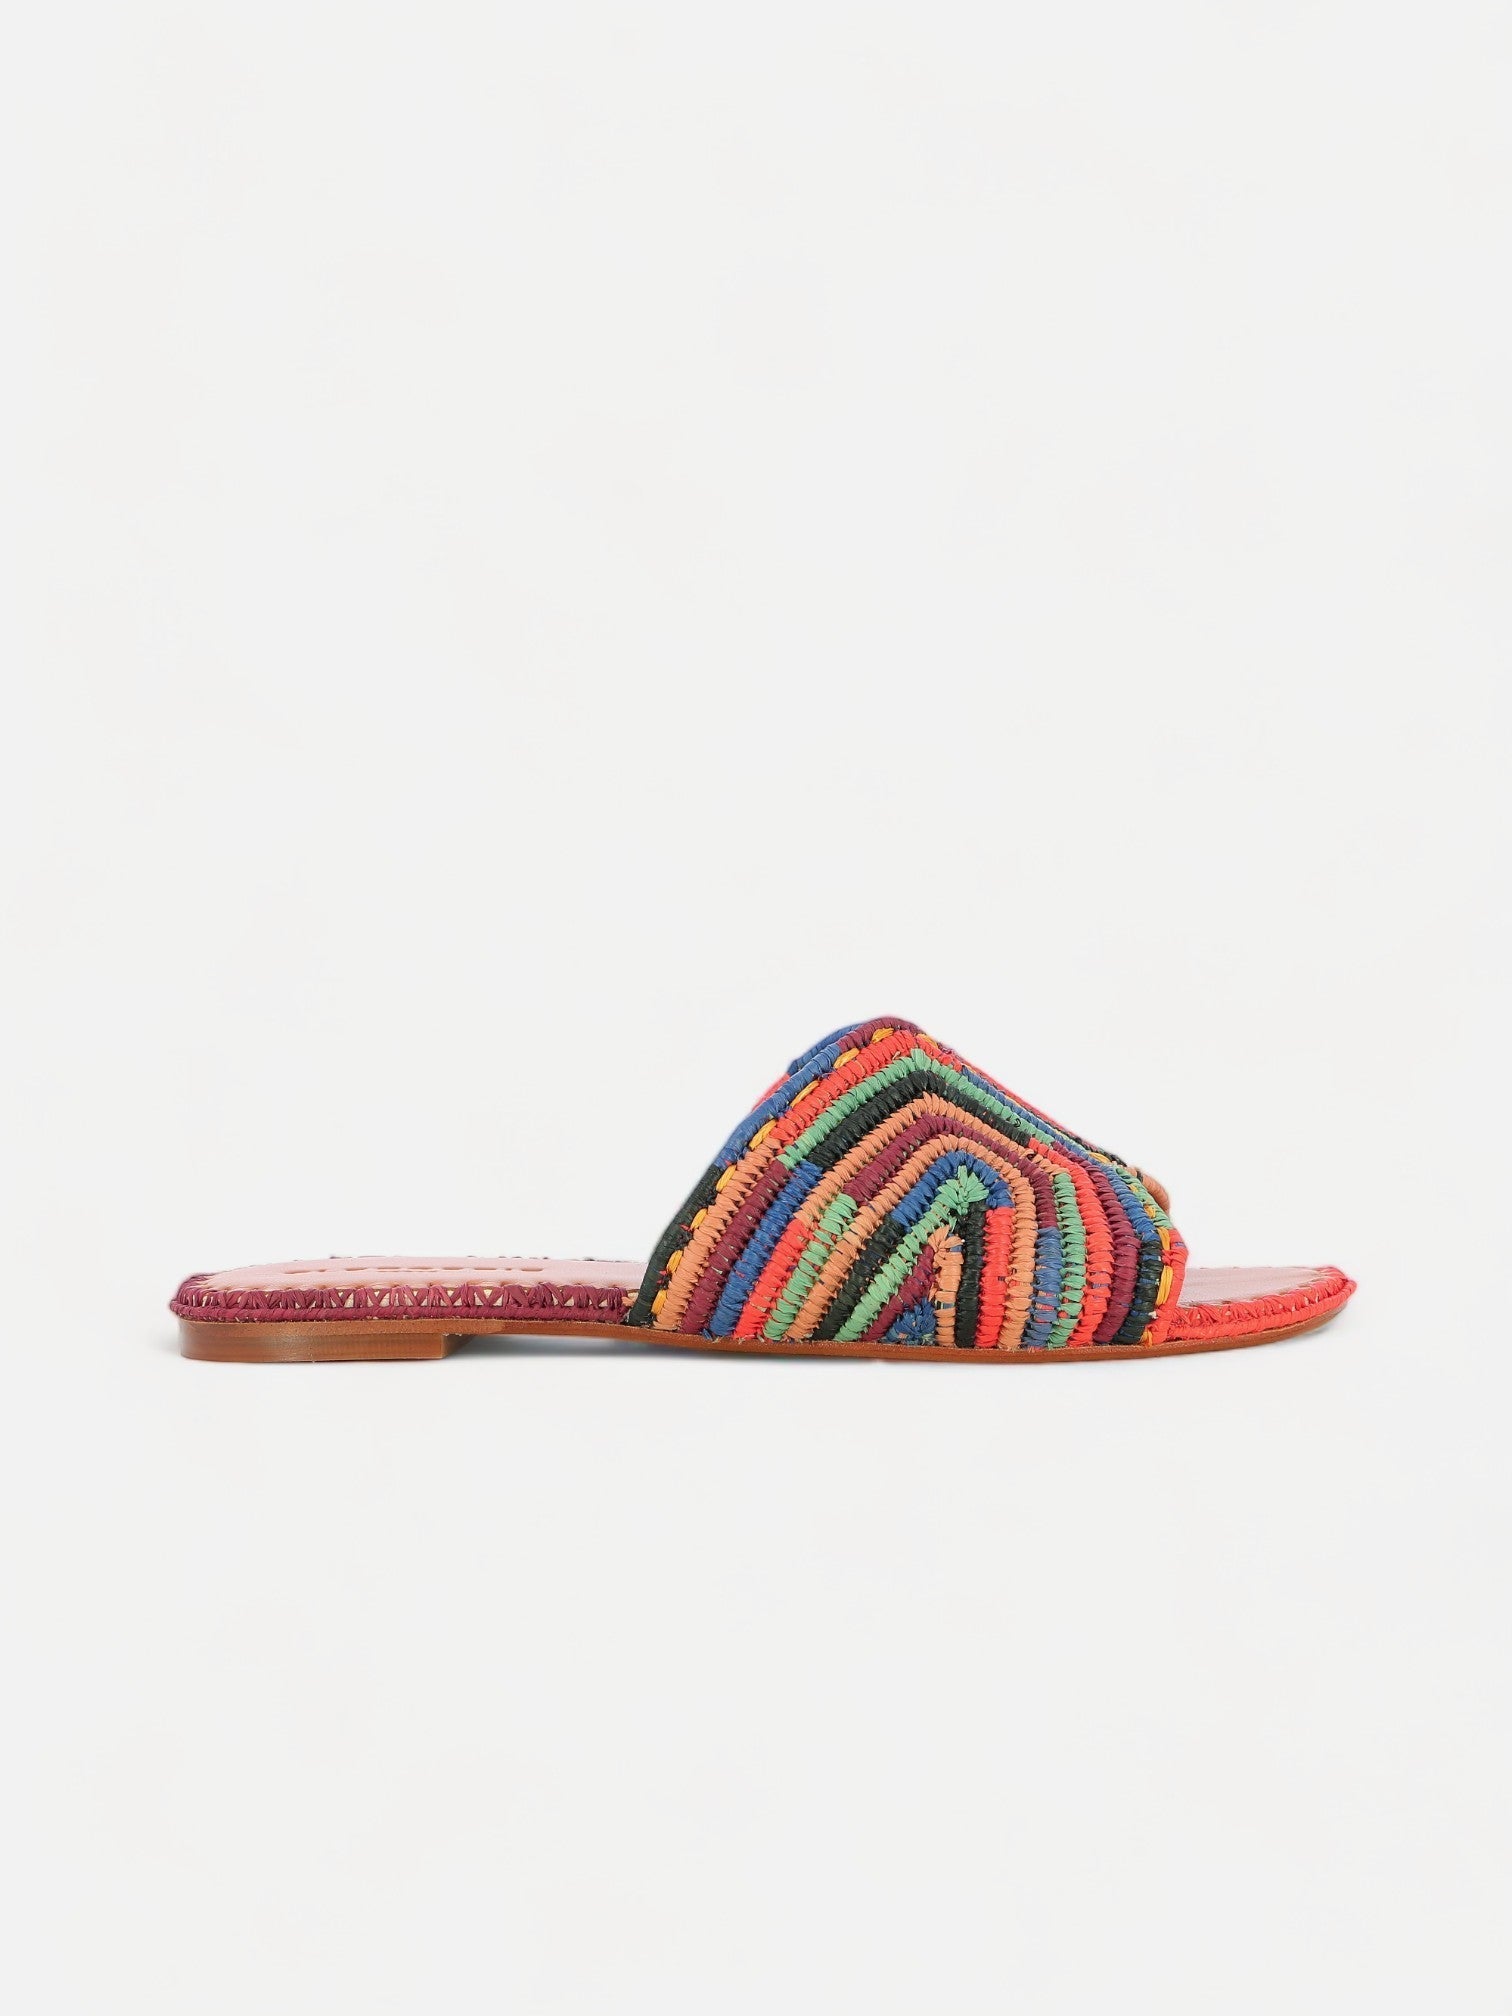 SANDALS - INENI sandals, multicolor raffia - Clergerie Paris - USA